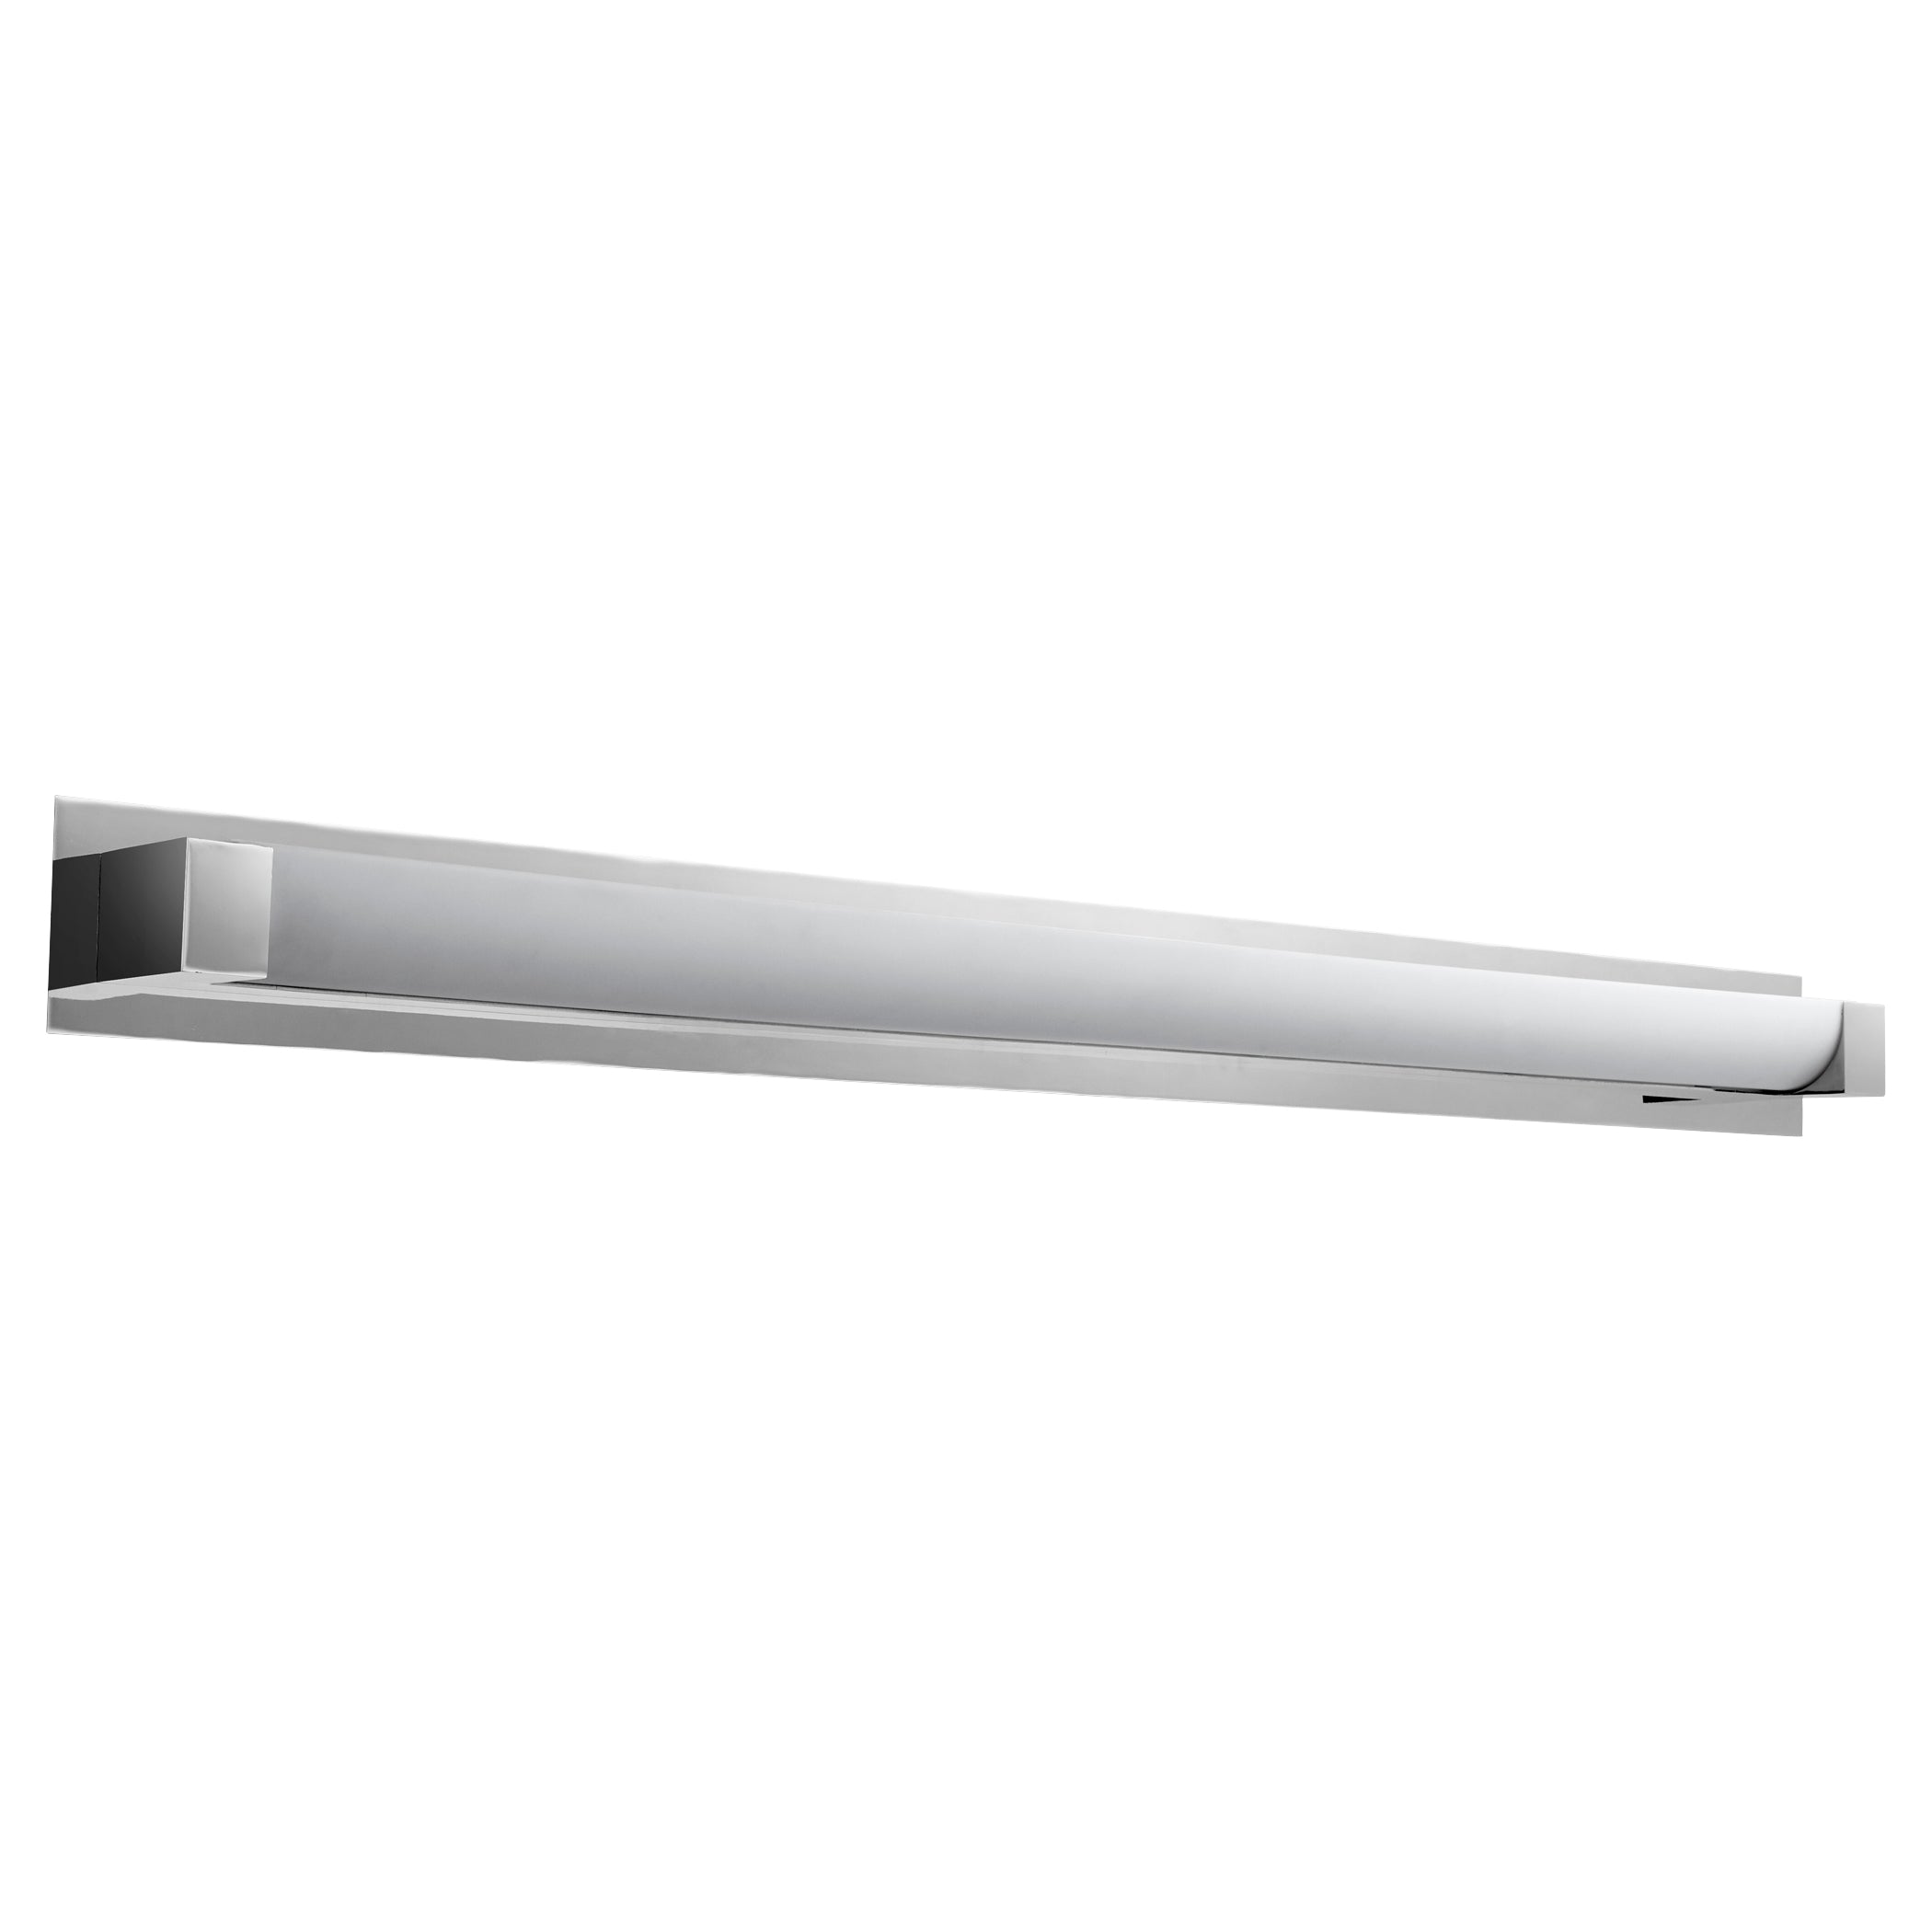 Oxygen Balance 3-549-20-BP420 Modern Vanity LED Light Fixture 53 Inch - Polished Nickel